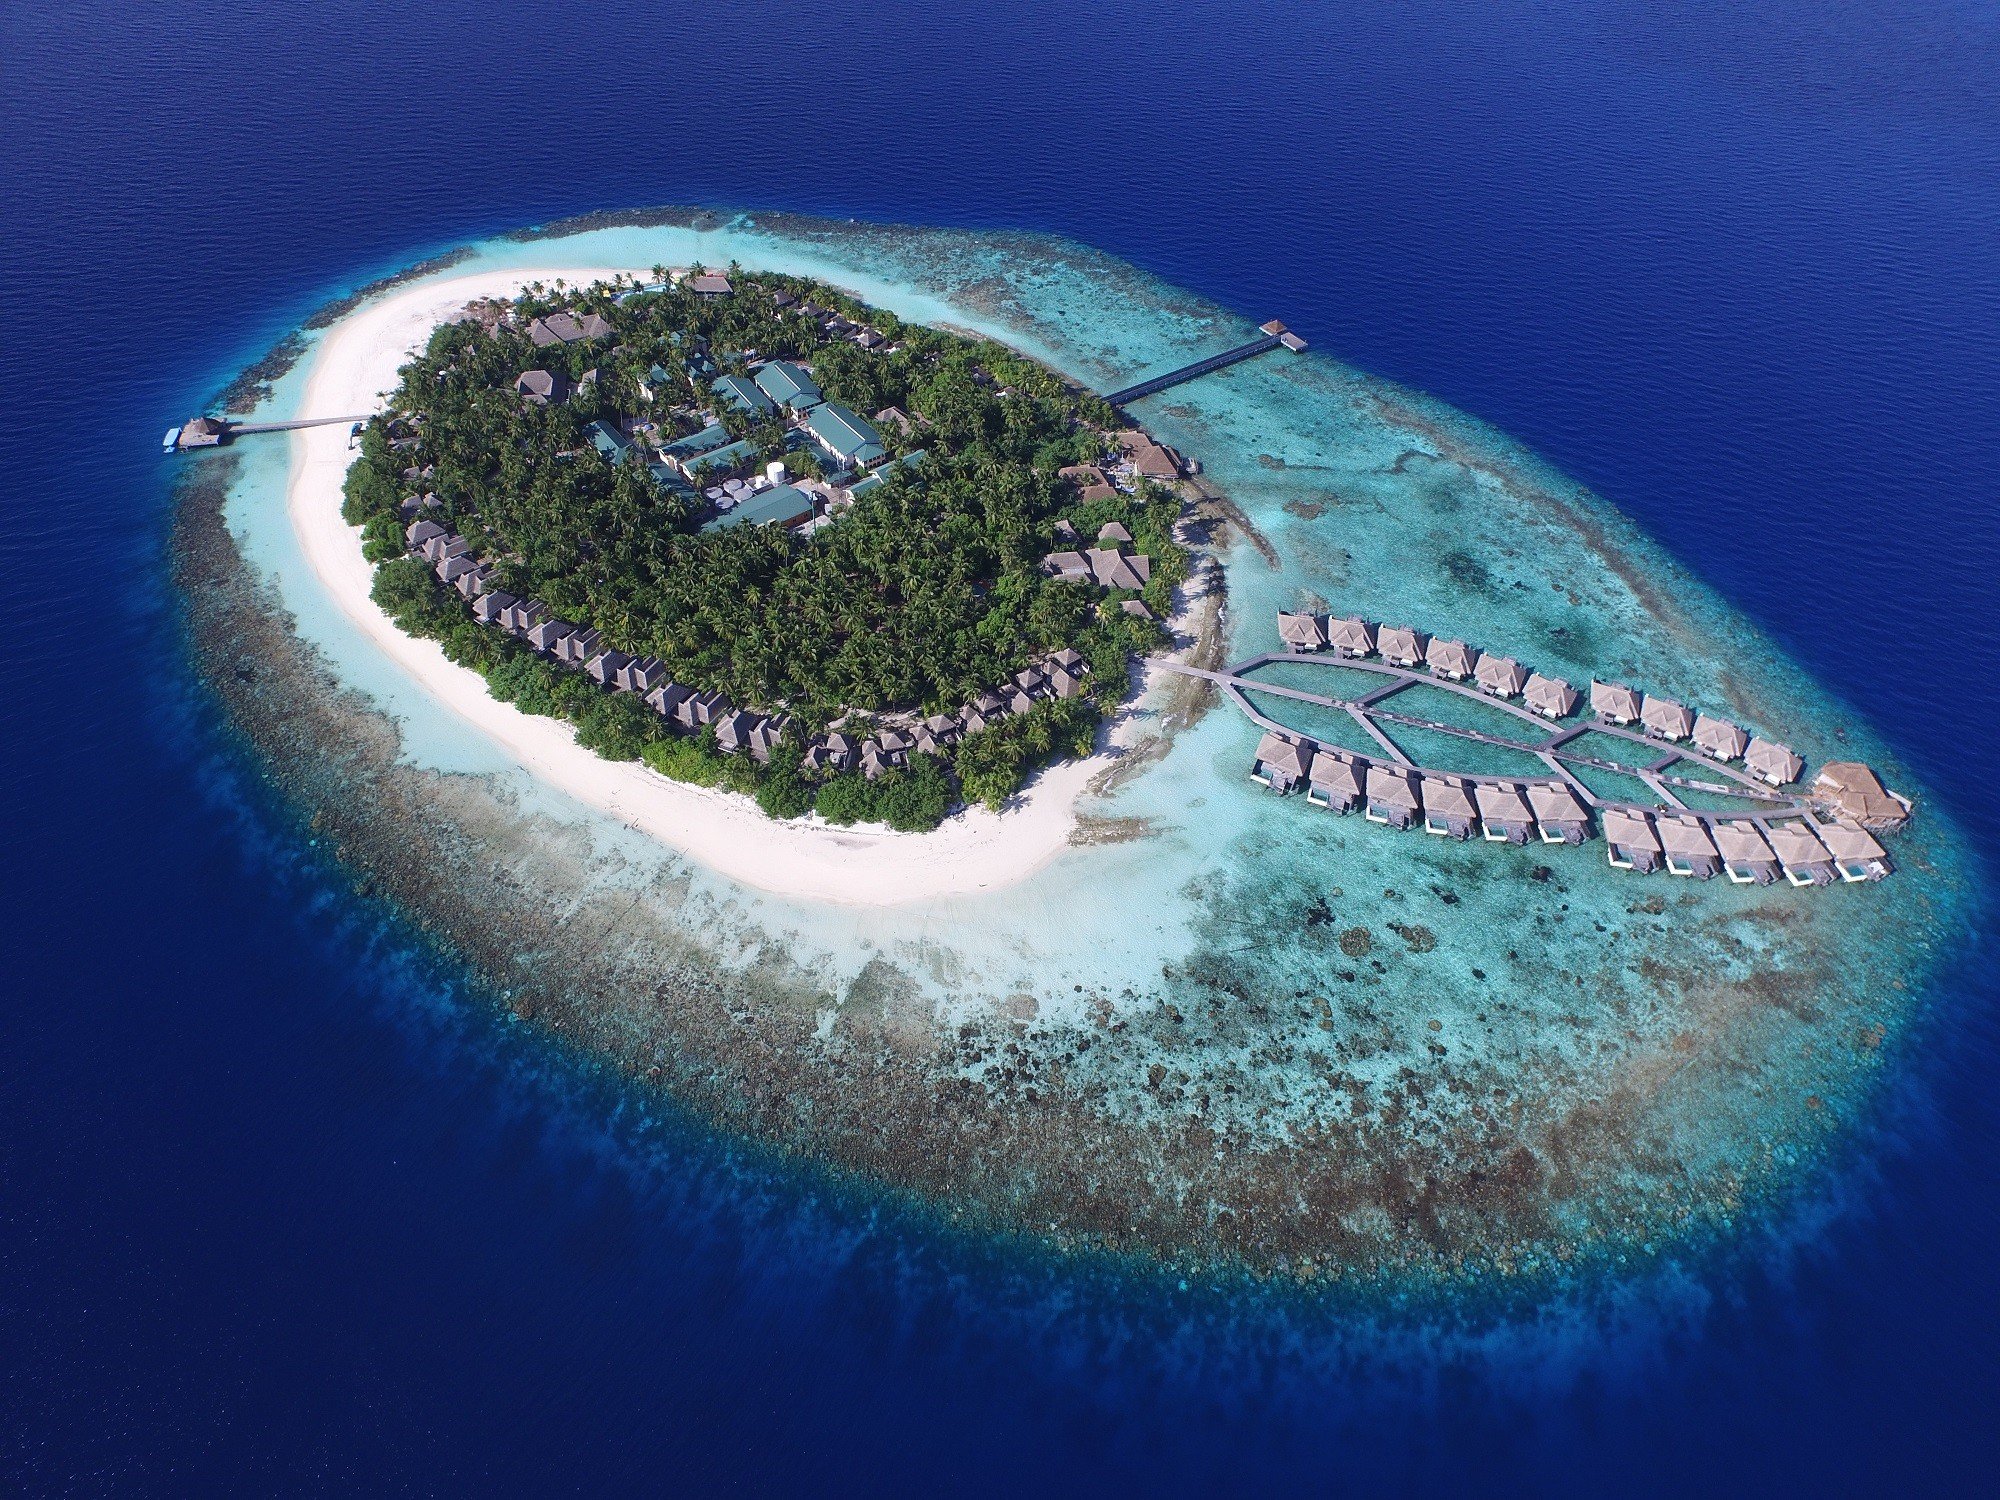 The Outrigger Konotta Maldives Resort